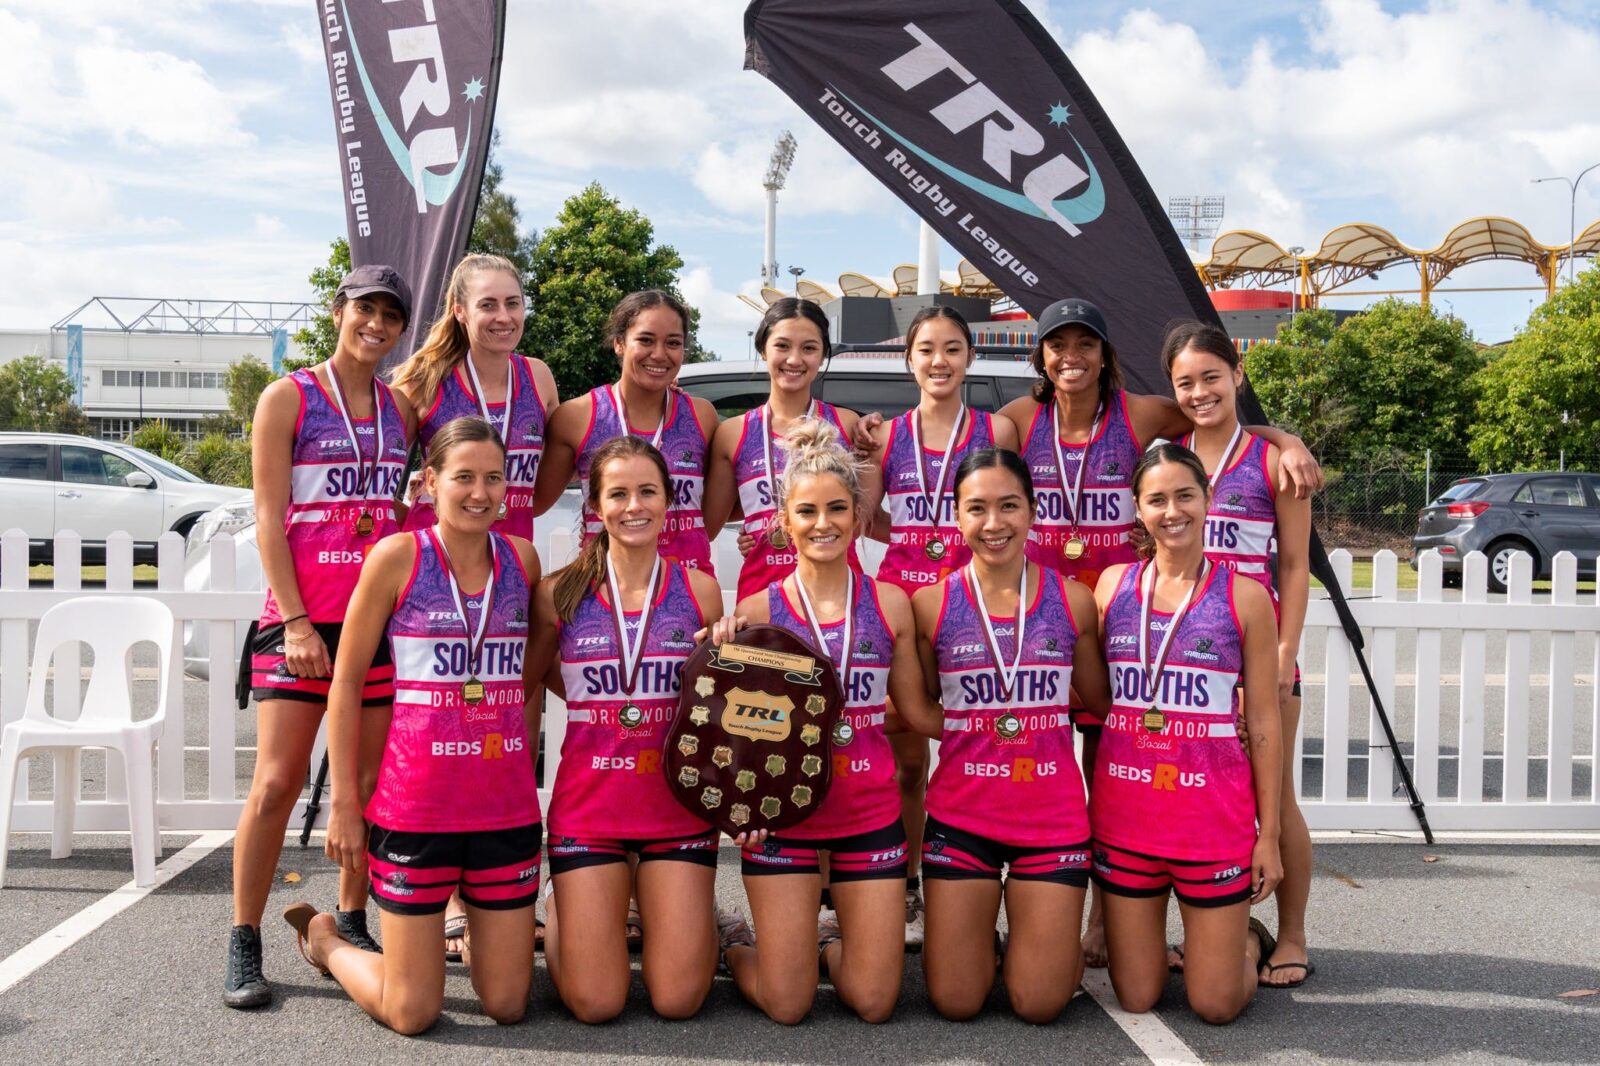 South Brisbane Women's Team